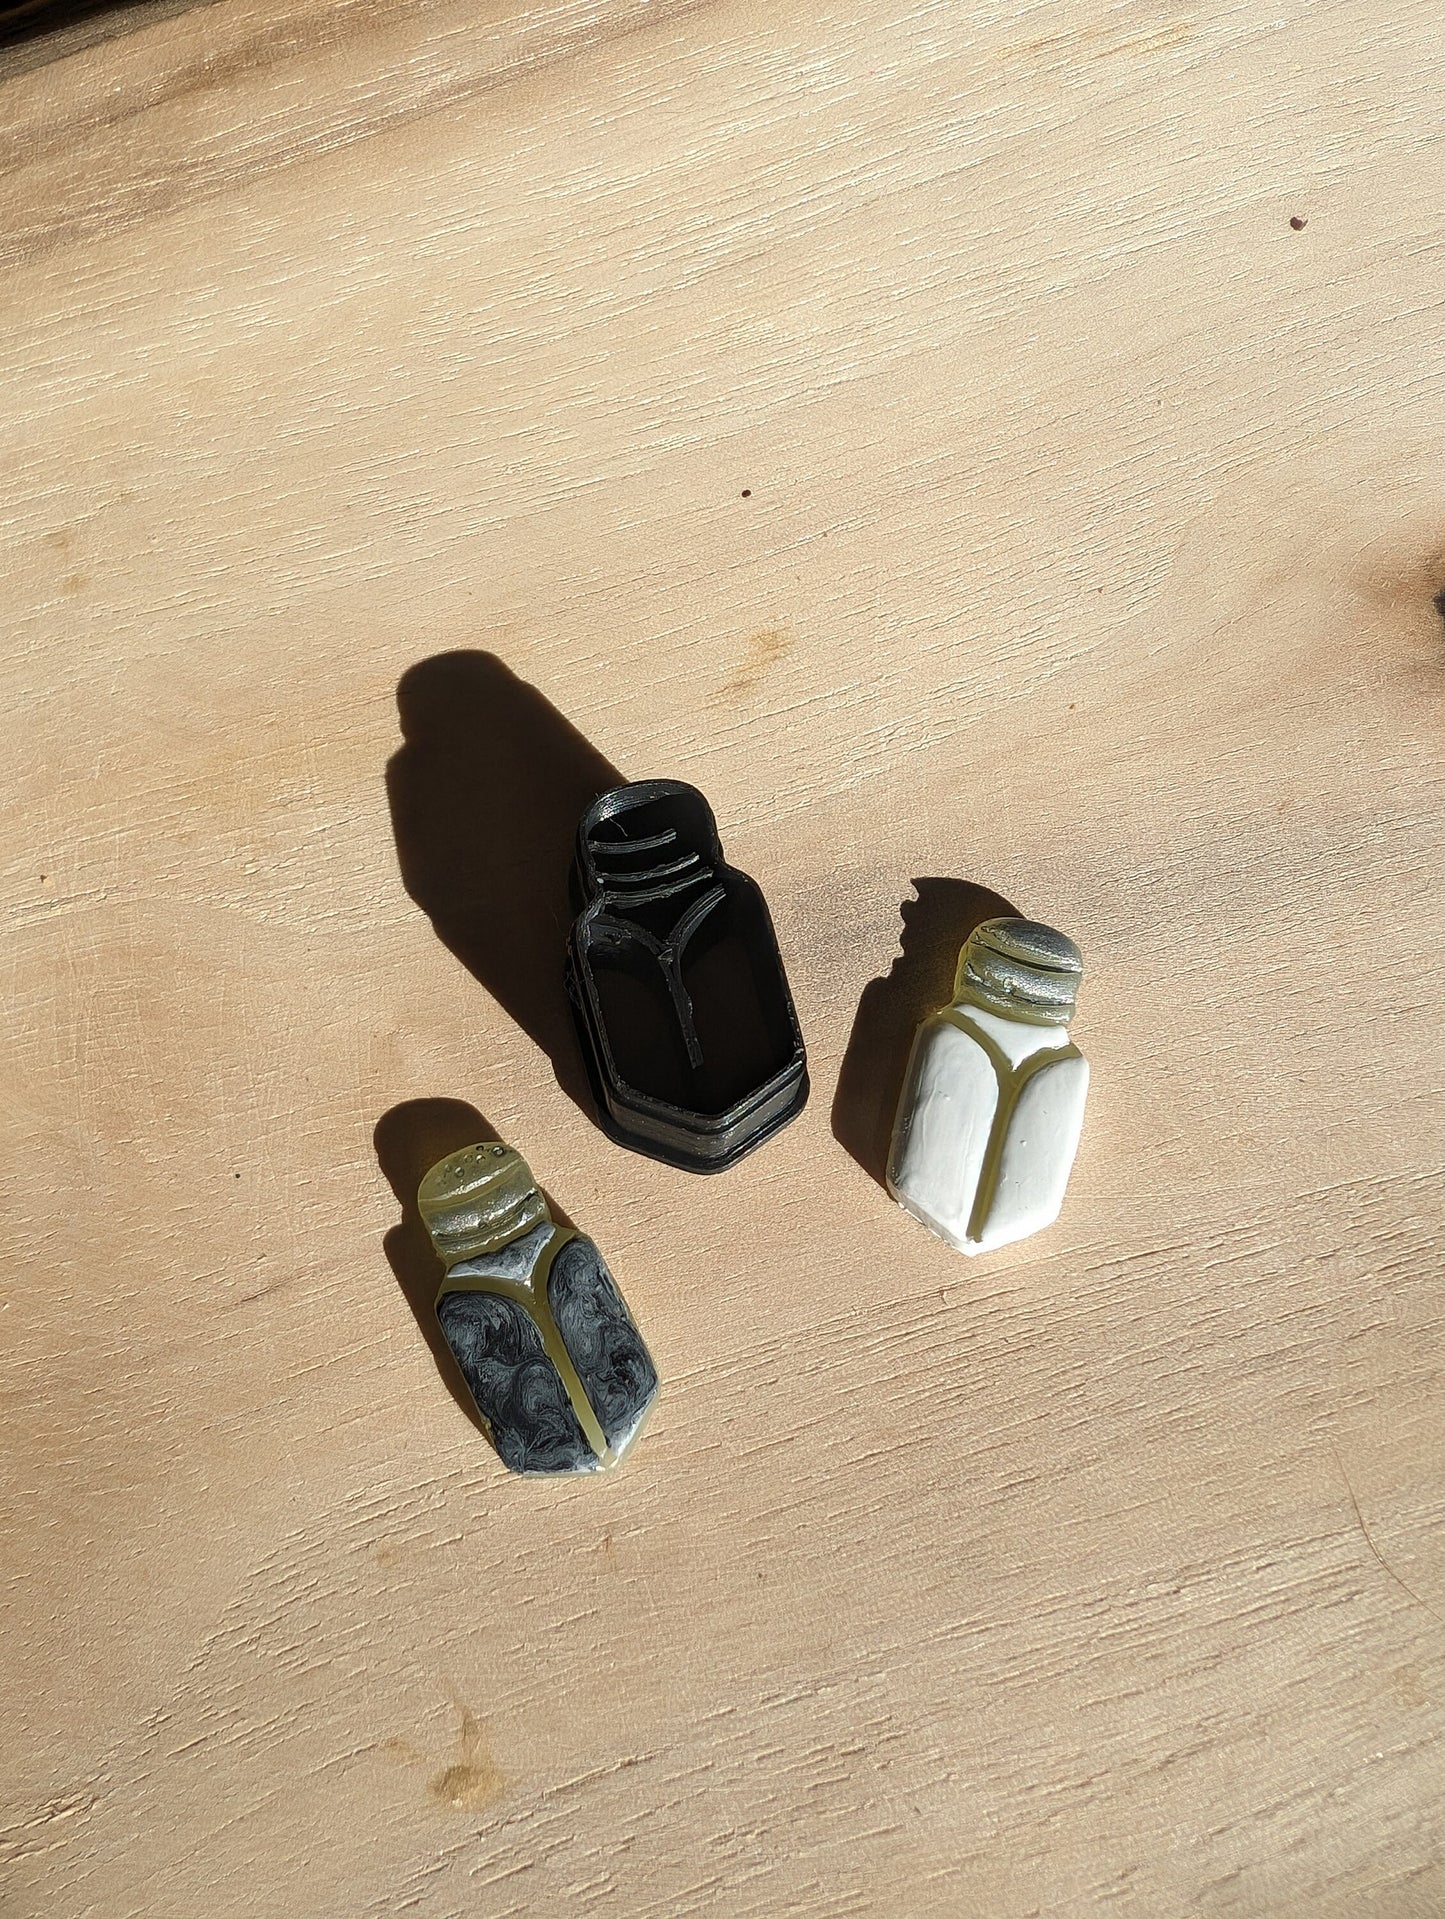 Tiny Spice Salt Shaker Potion Bottle Sharp Earring Clay Cutter